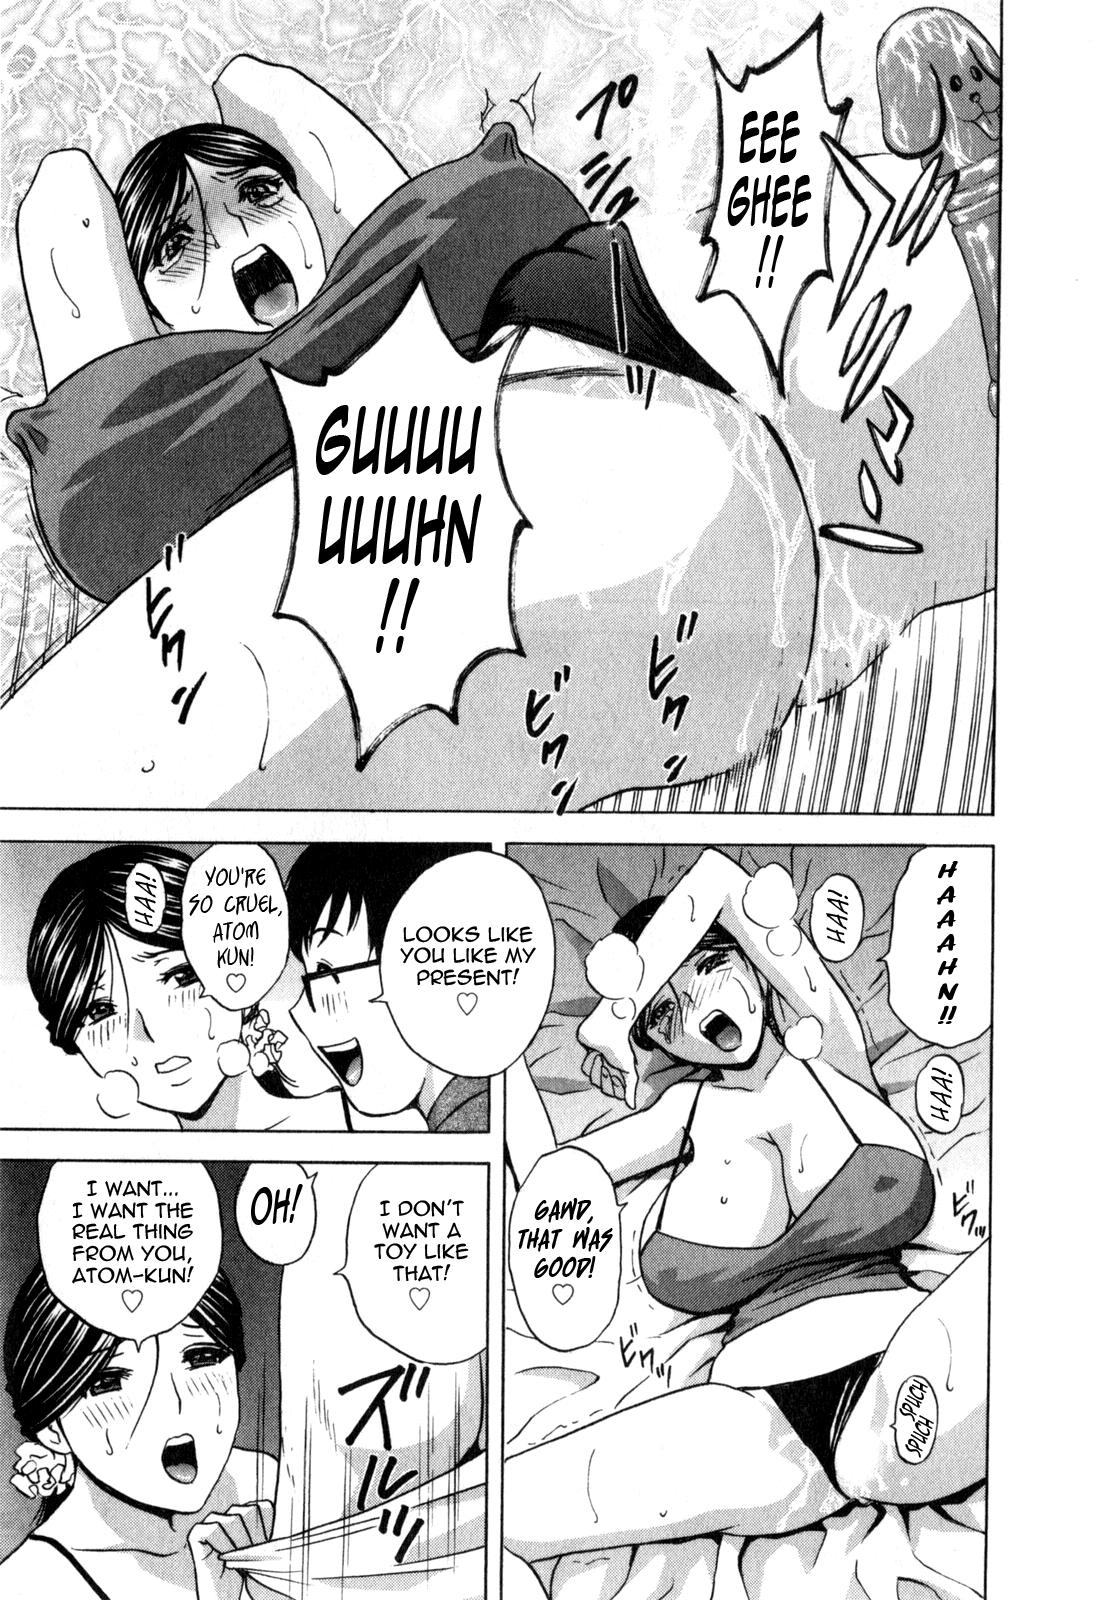 [Hidemaru] Life with Married Women Just Like a Manga 3 - Ch. 1-5 [English] {Tadanohito} 20